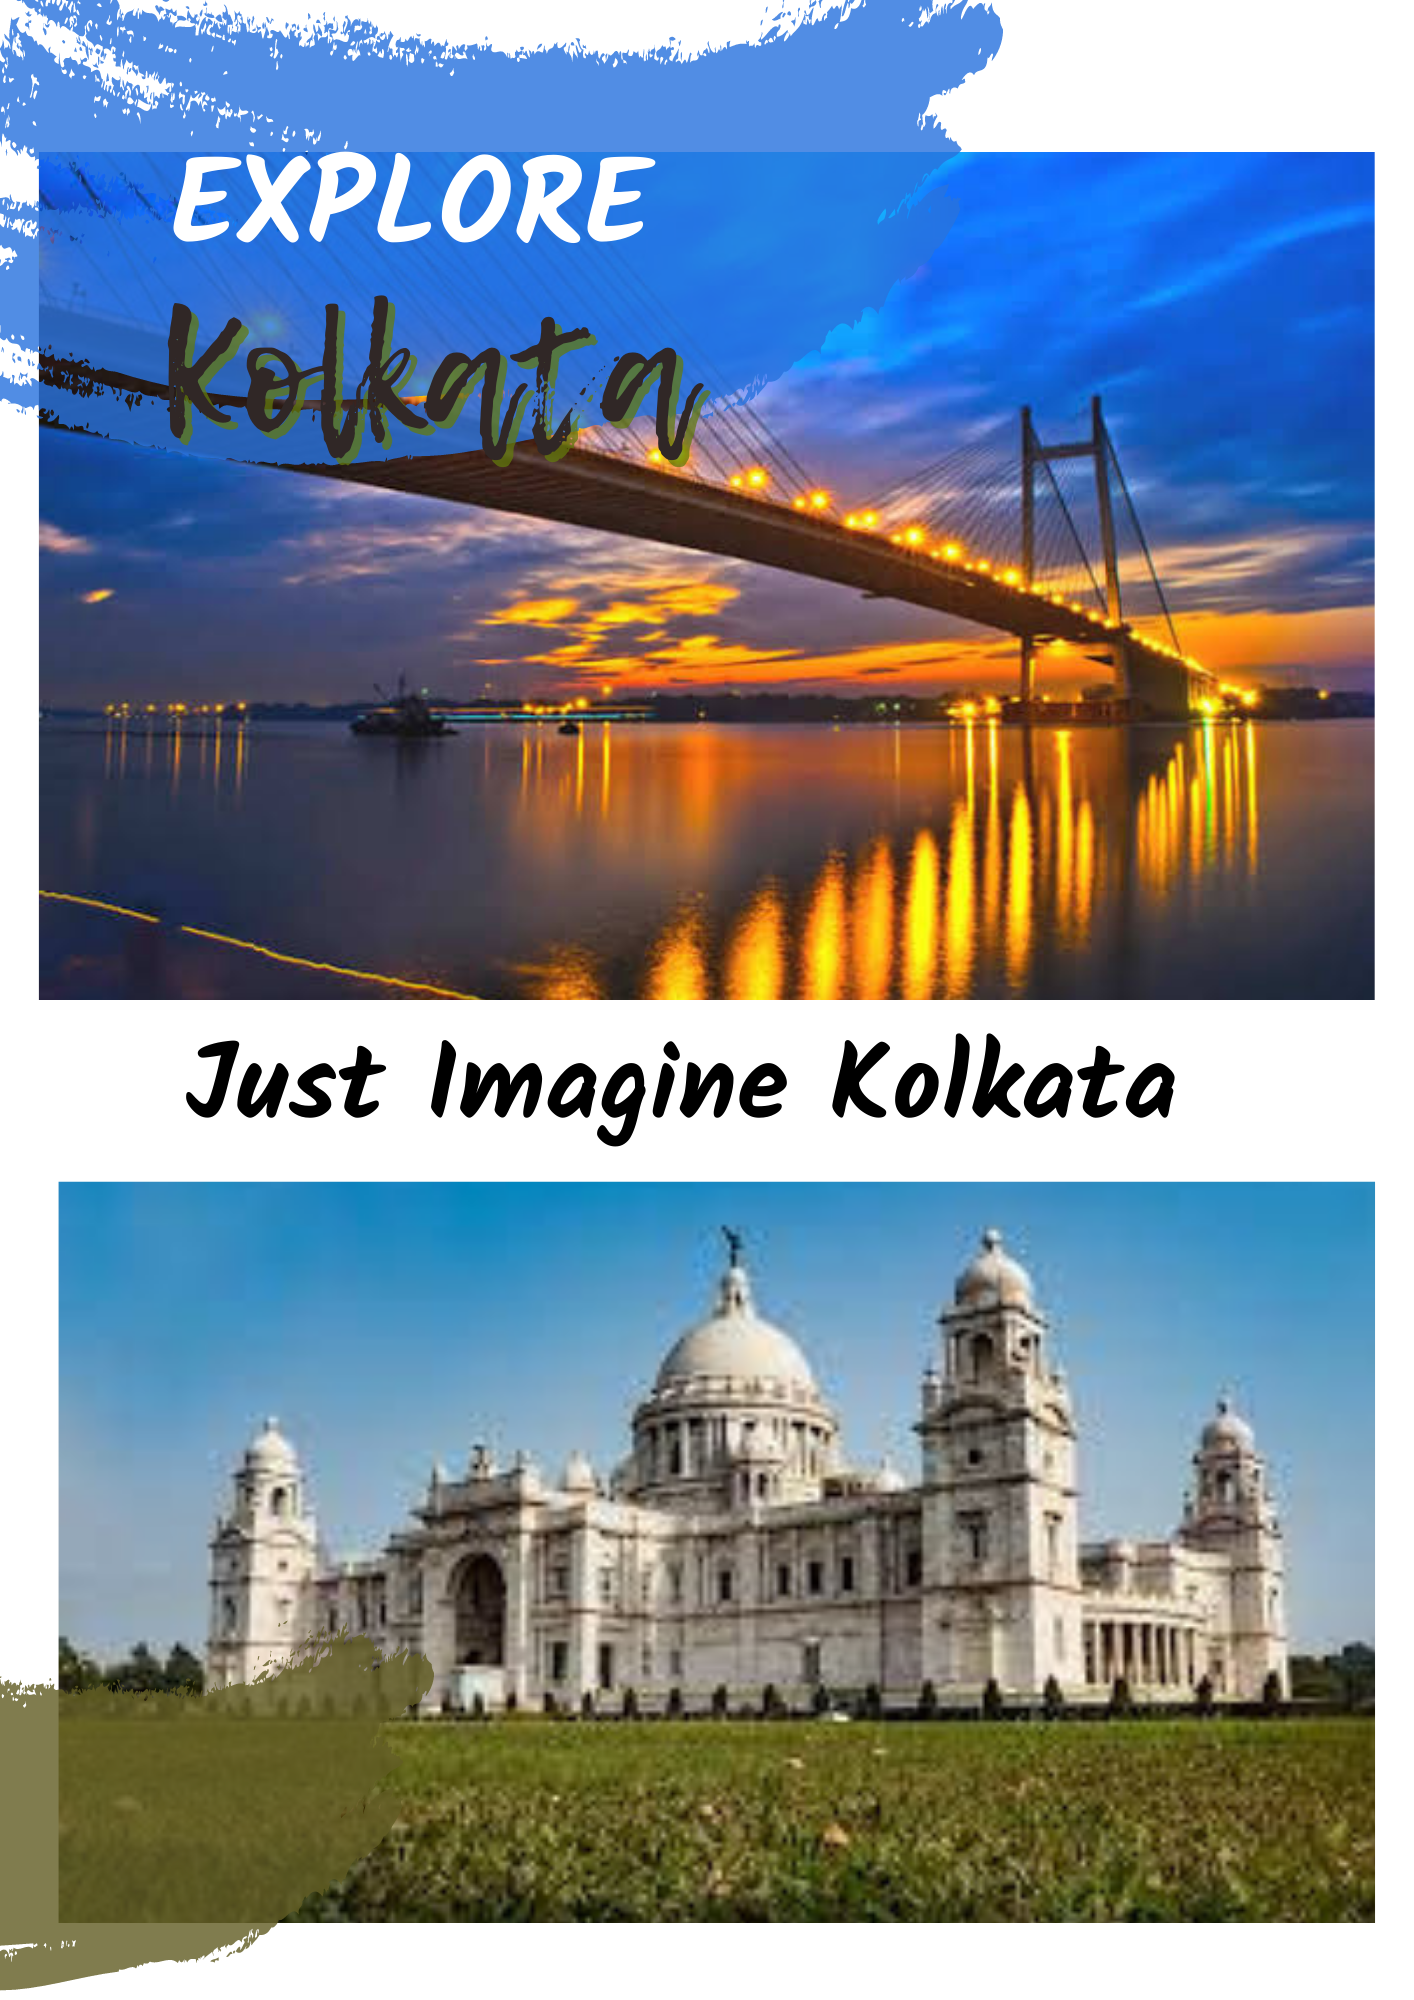 Just imagine Kolkata